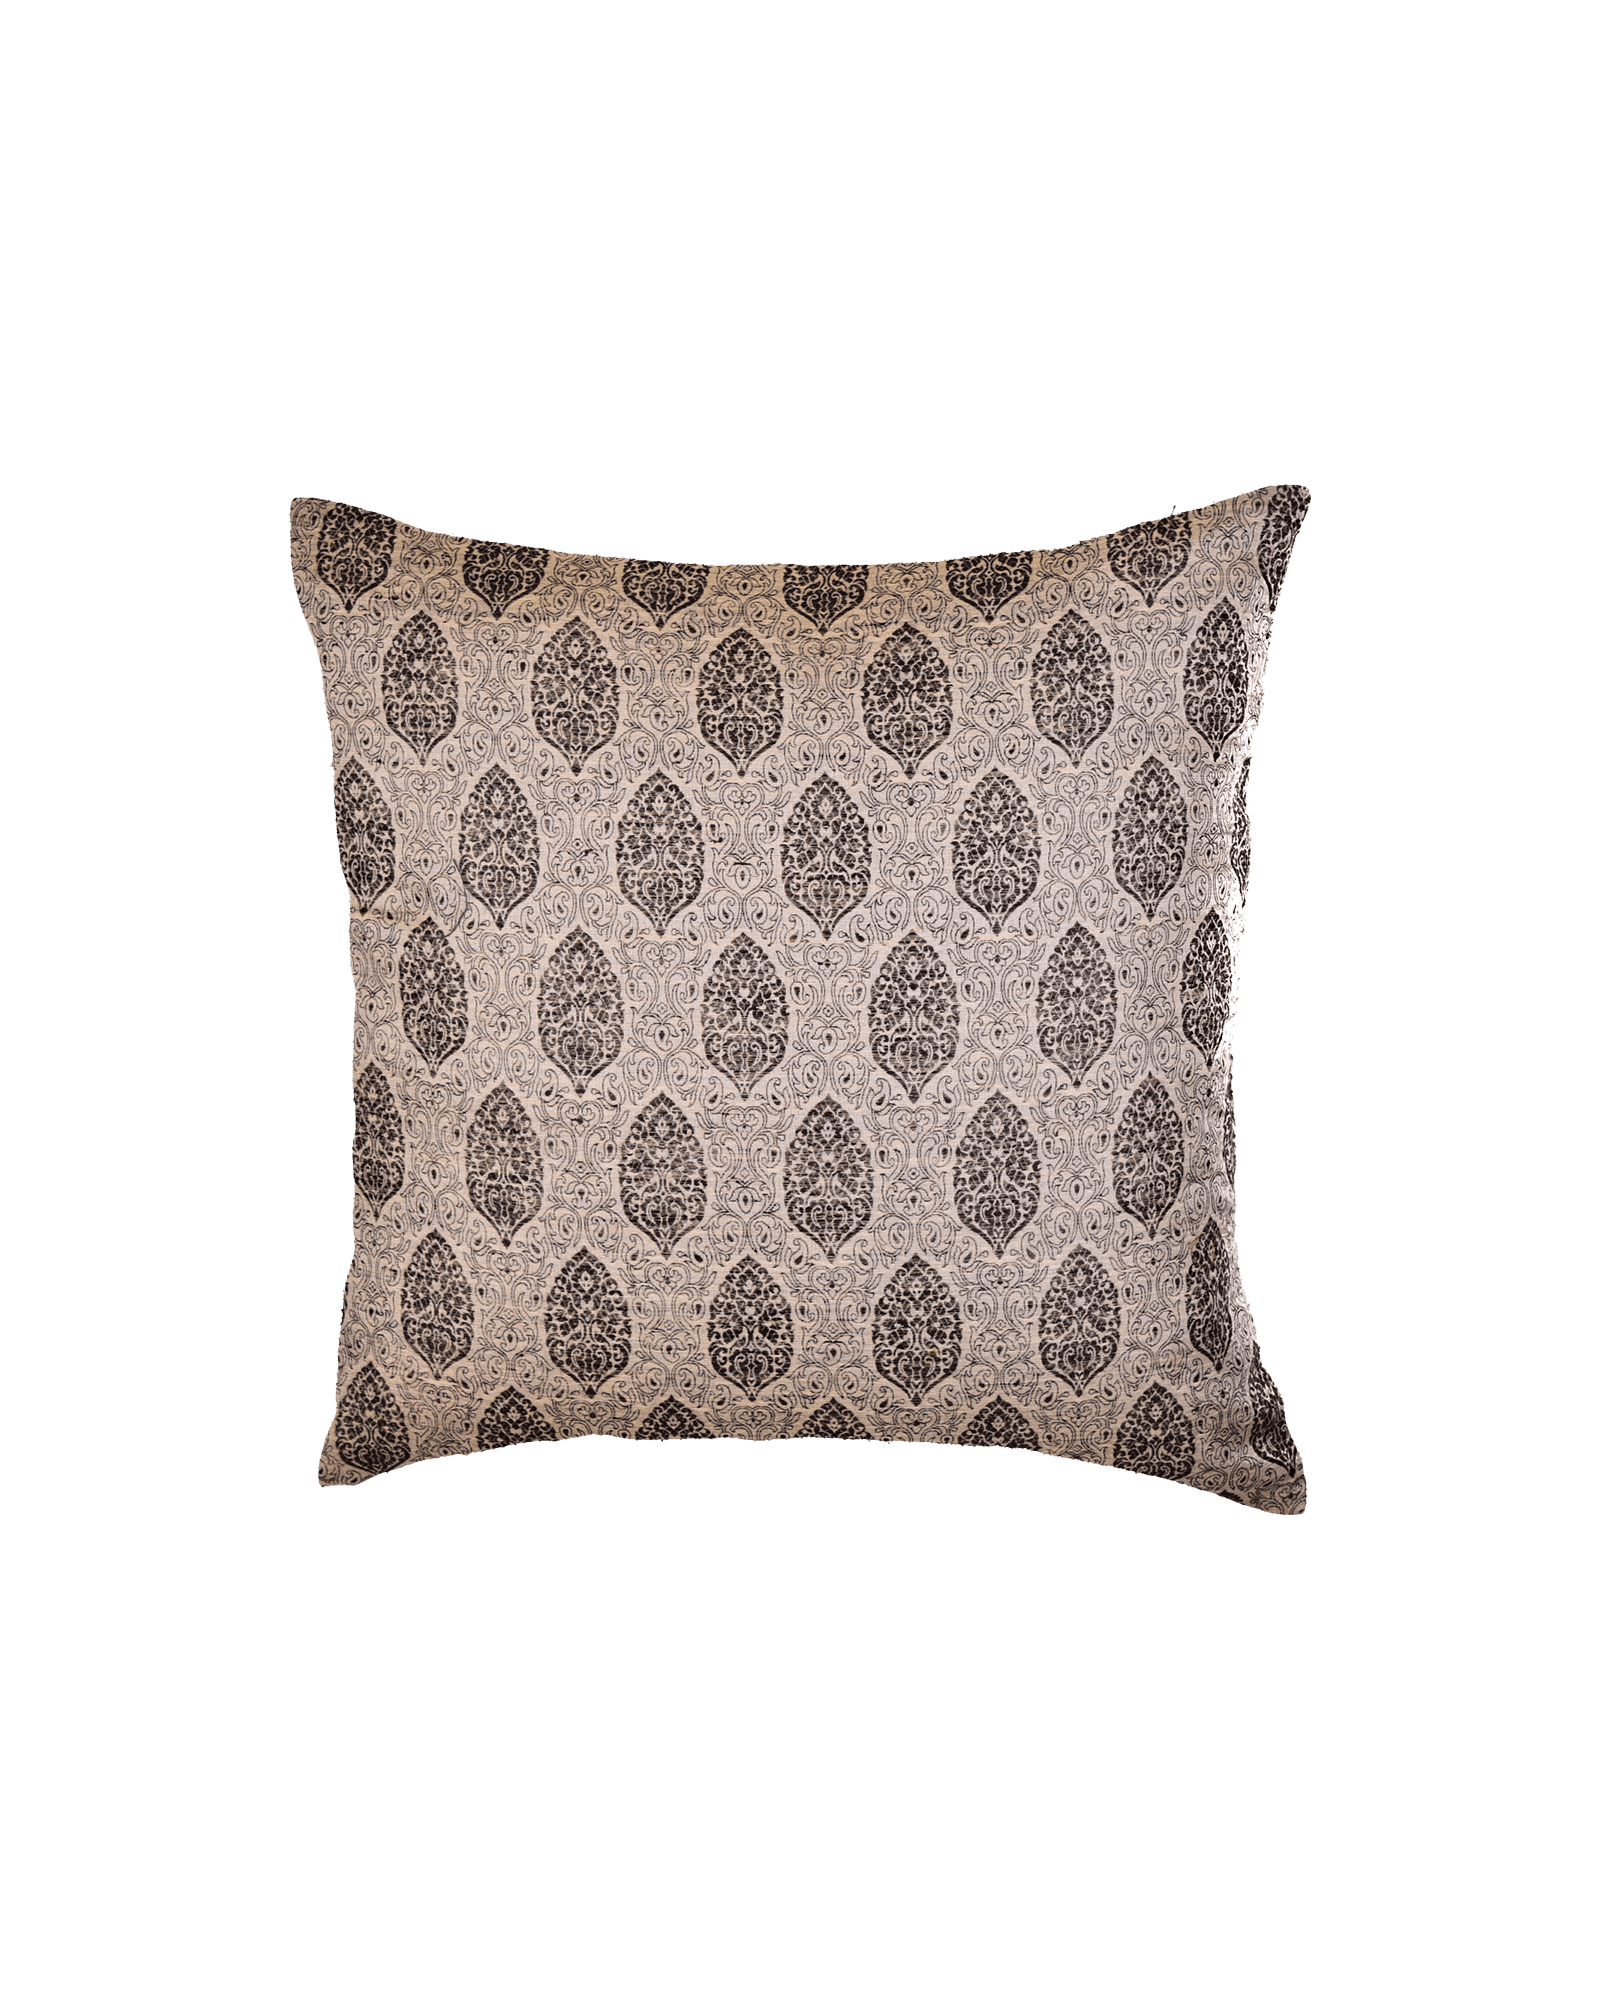 Stone Gray Banarasi Resham Brocade Linen Silk Cushion Cover 16" - By HolyWeaves, Benares